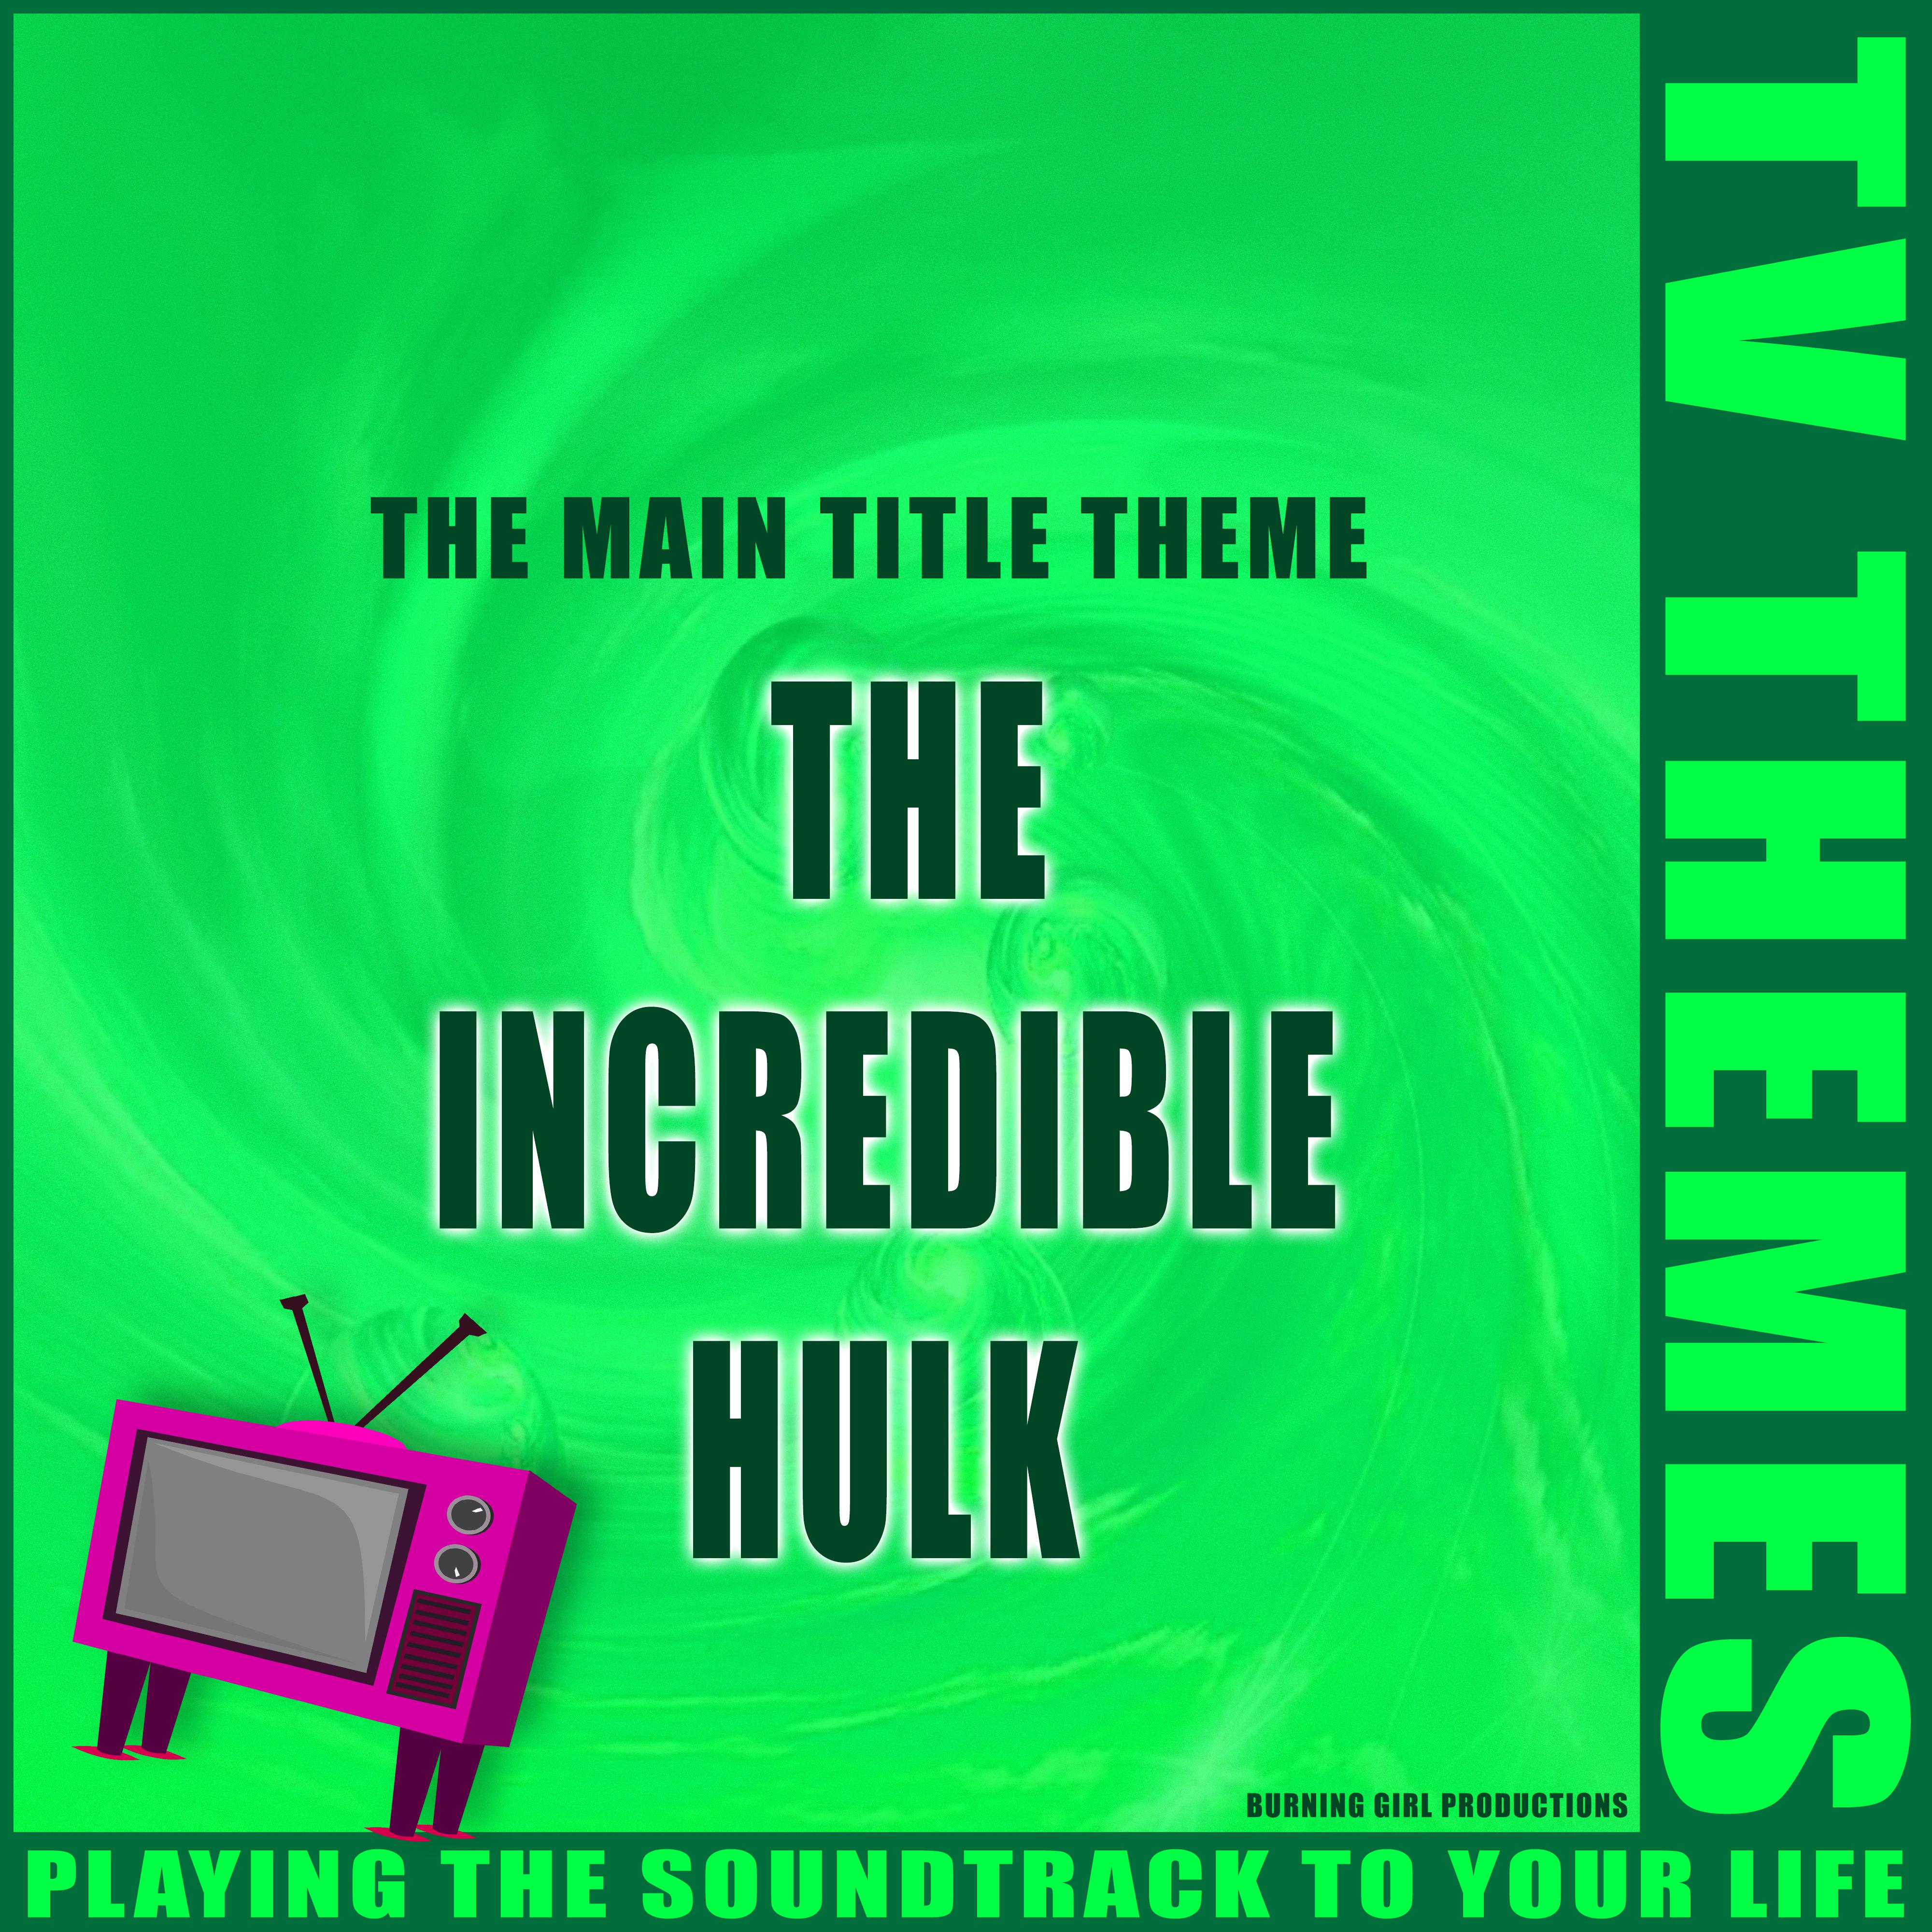 The Main Title Theme - The Incredible Hulk